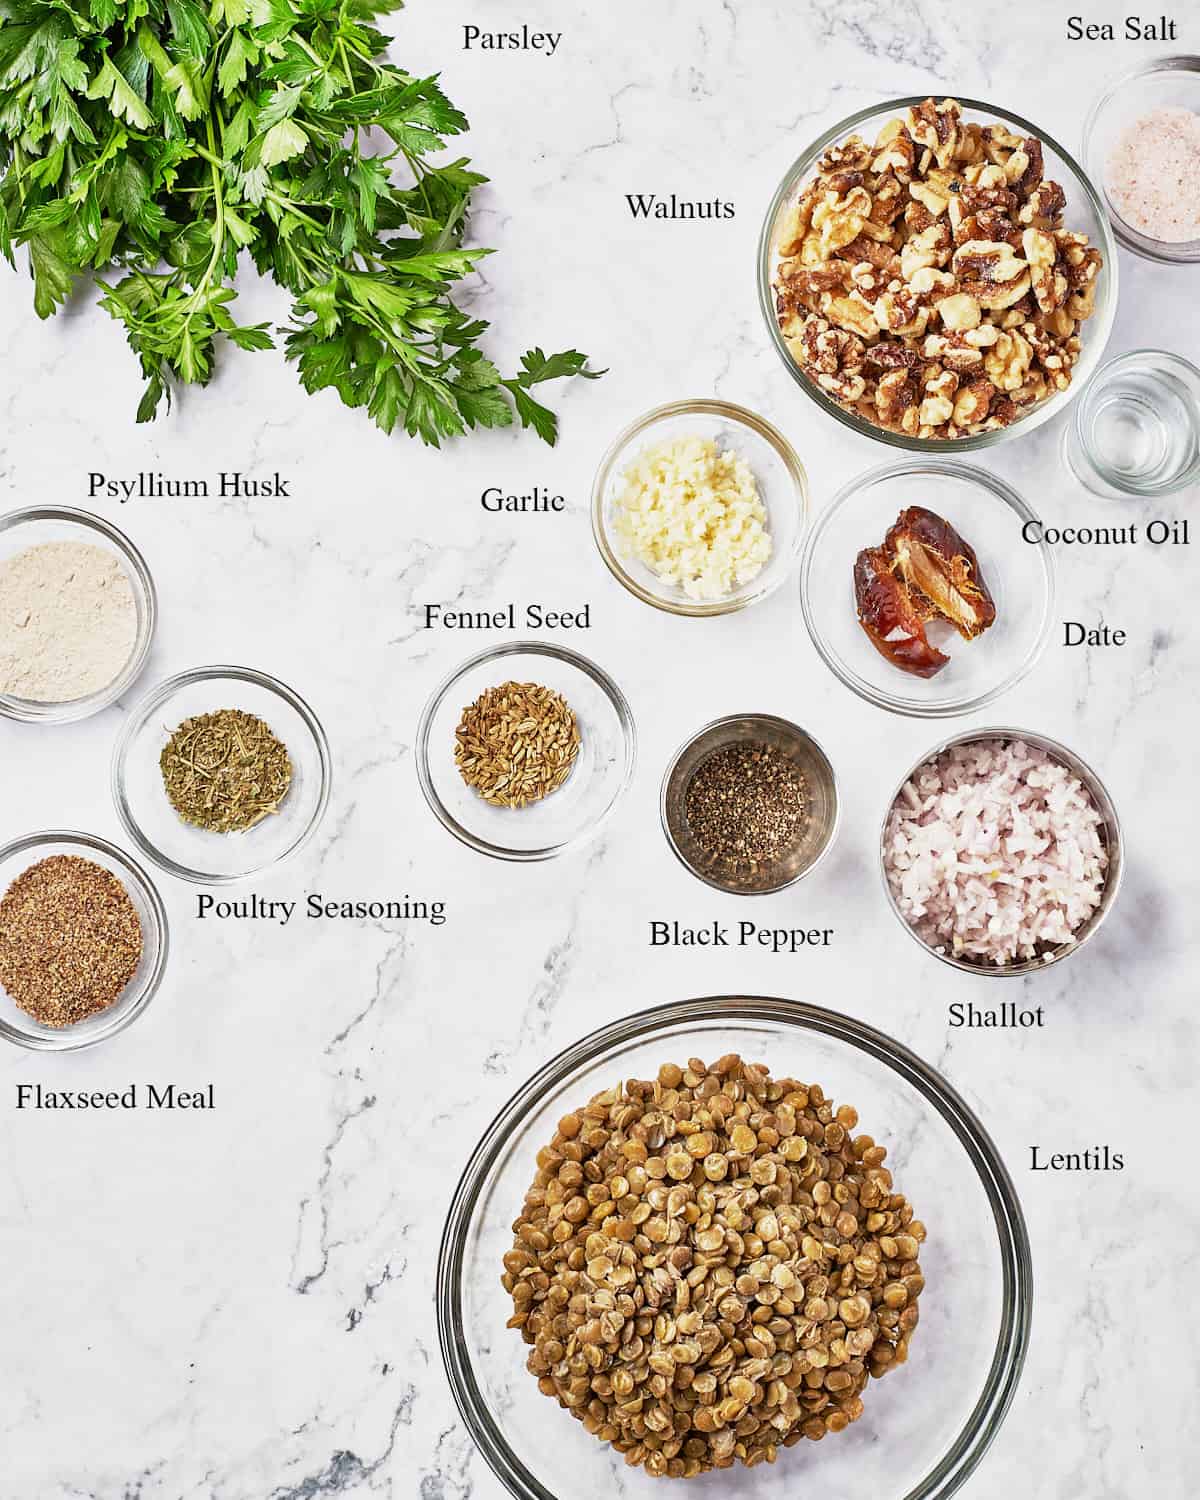 Ingredients to make easy vegan meatballs recipe.